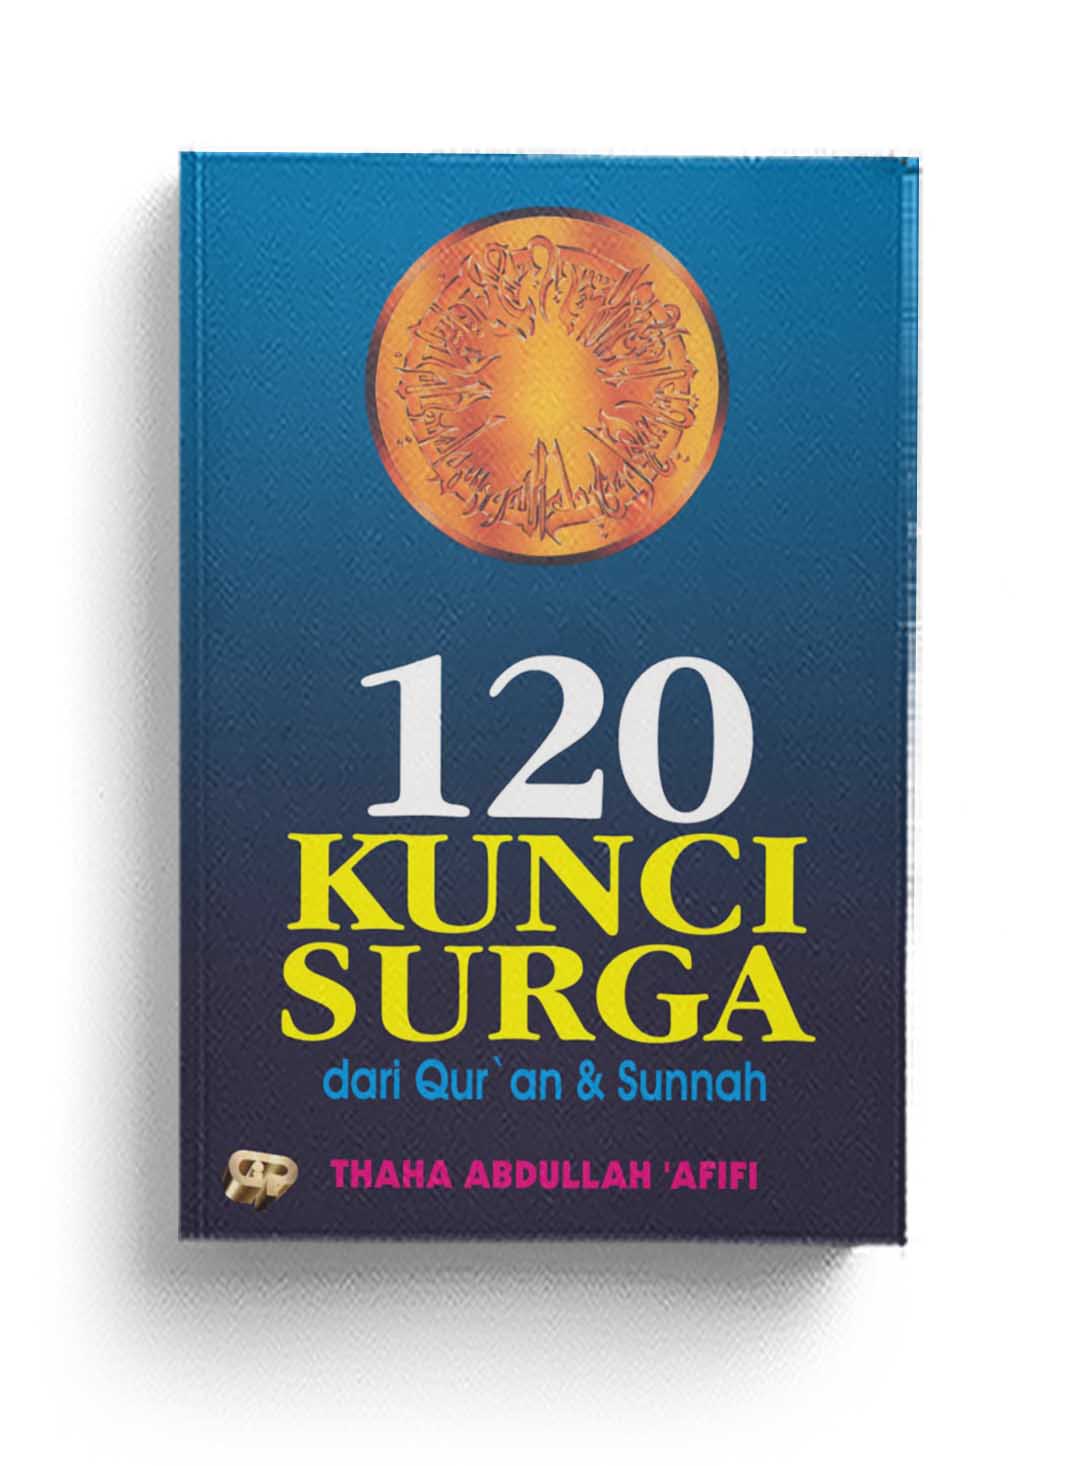 120 Kunci Surga dari Qur'an dan Sunah